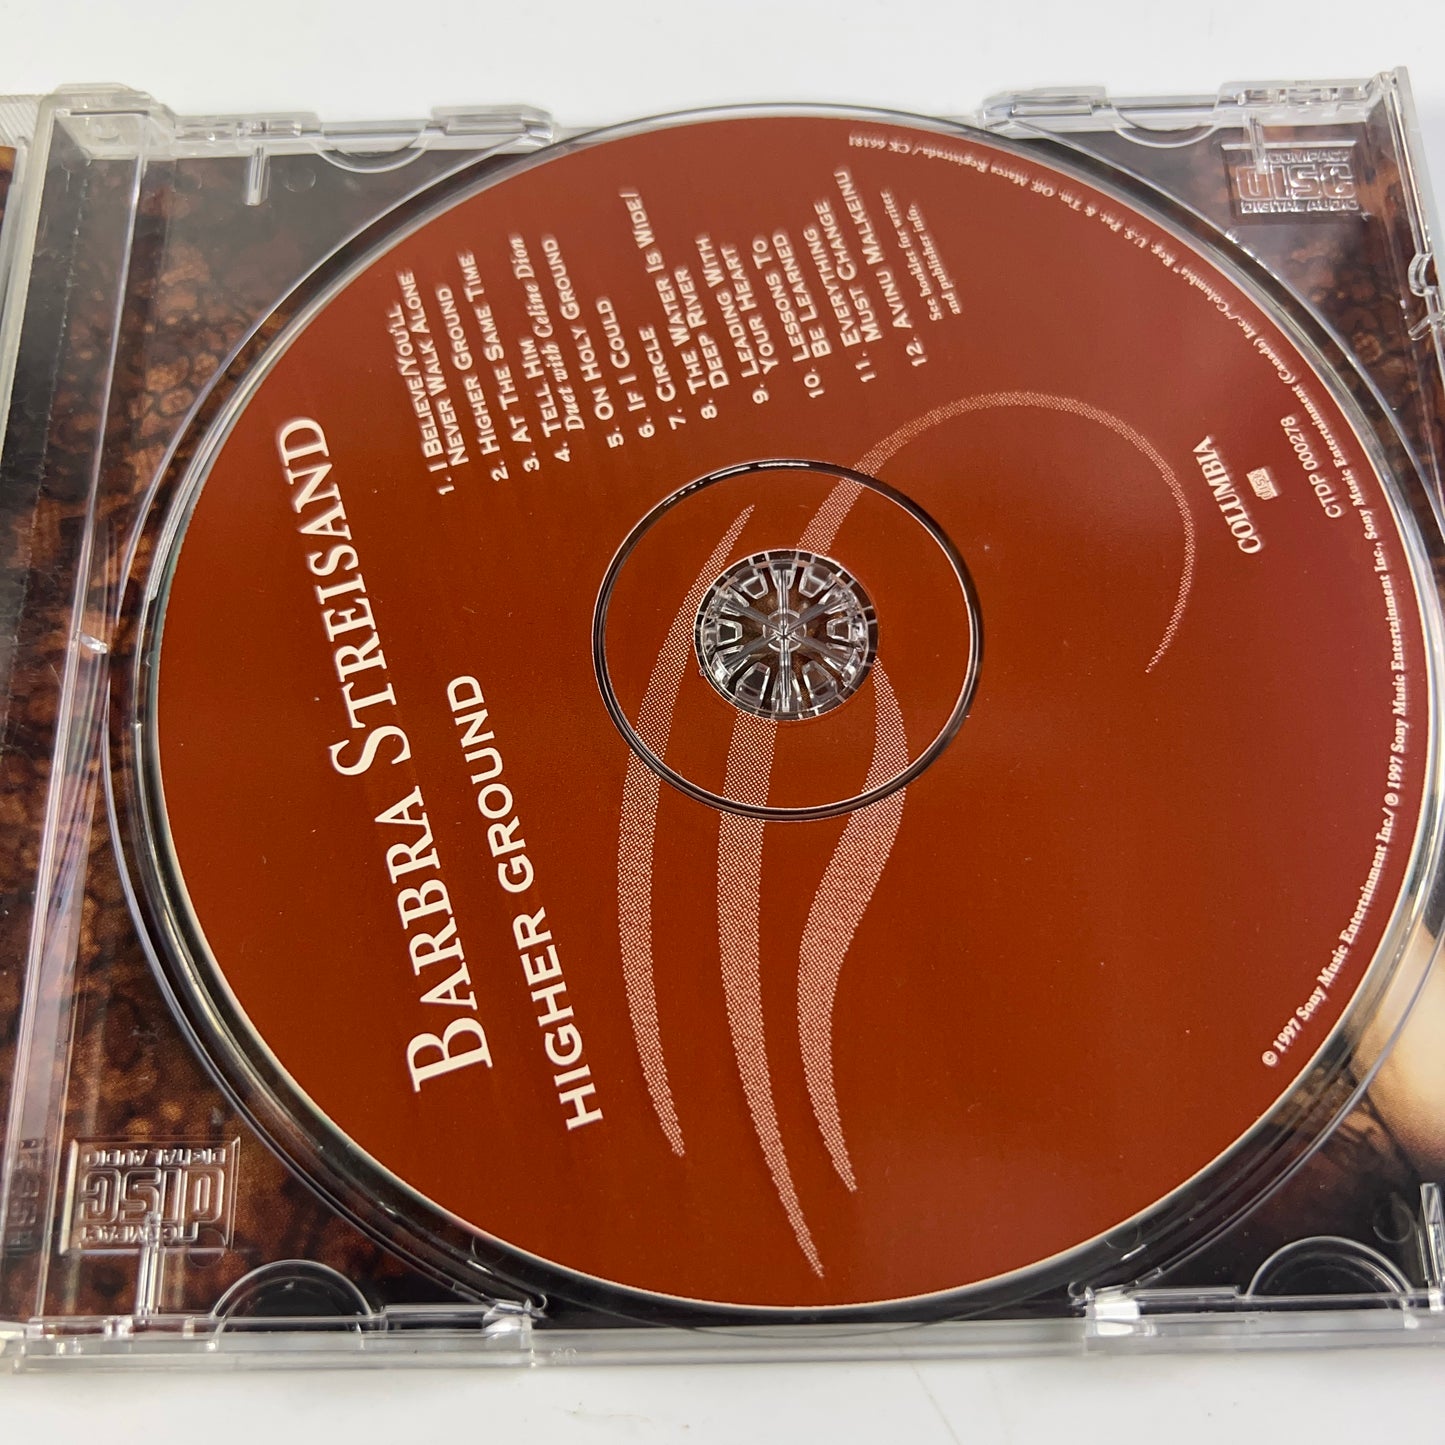 Higher Ground by Barbra Streisand (CD, 1997)